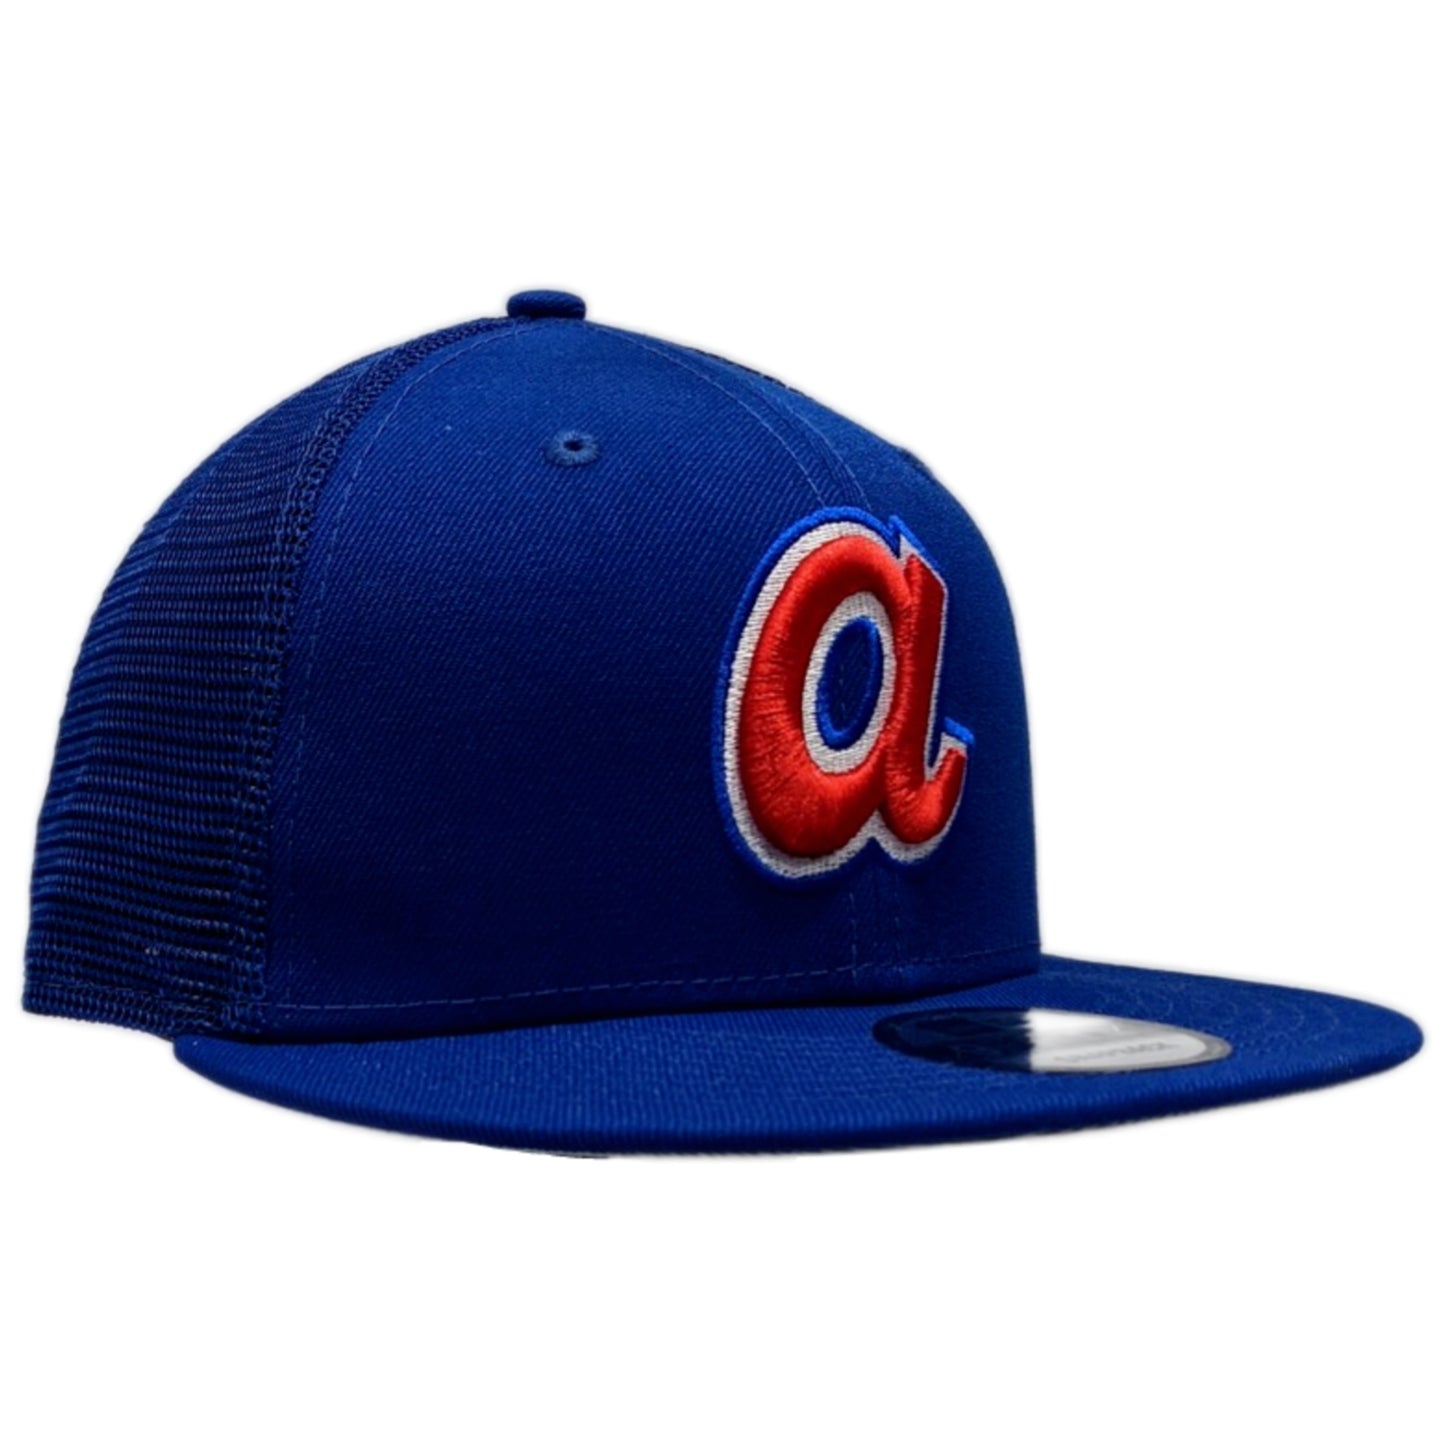 Men's Atlanta Braves New Era Cooperstown Collection Royal Mesh 9FIFTY Adjustable Snapback Hat